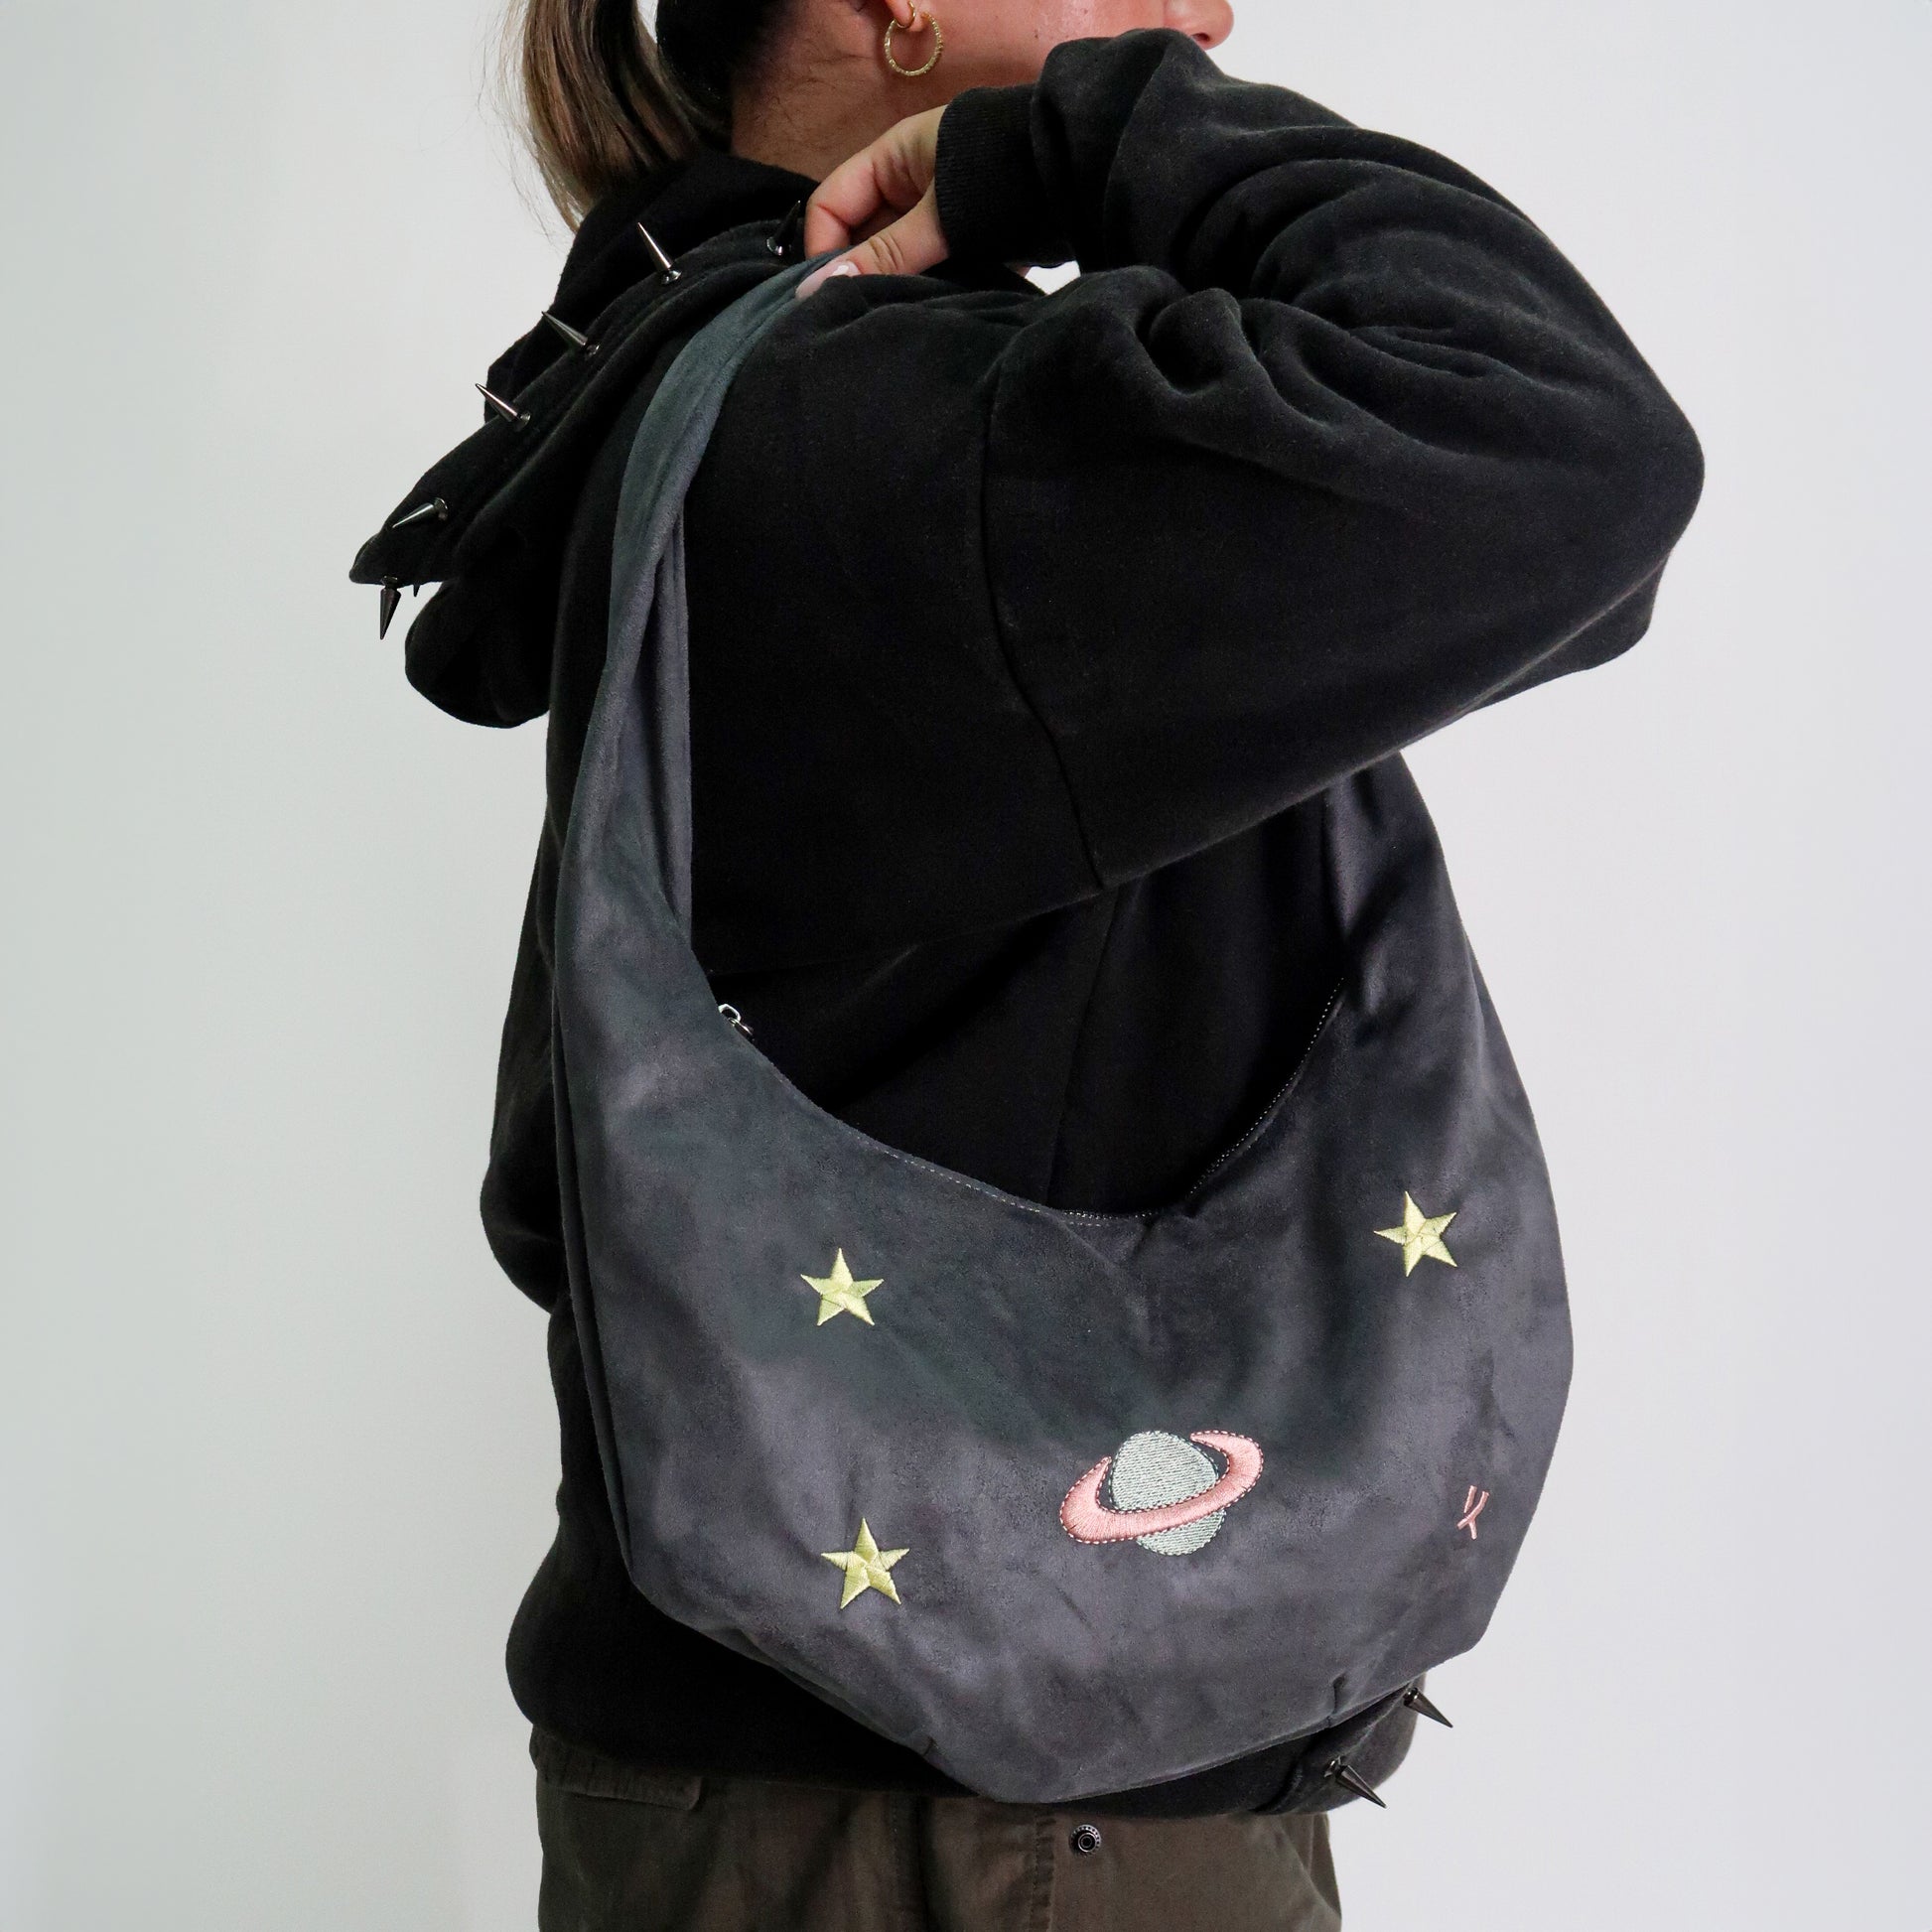 A Fairytale Galaxy Shoulder Bag - Accessories - KOI Footwear - Grey - Model Side View